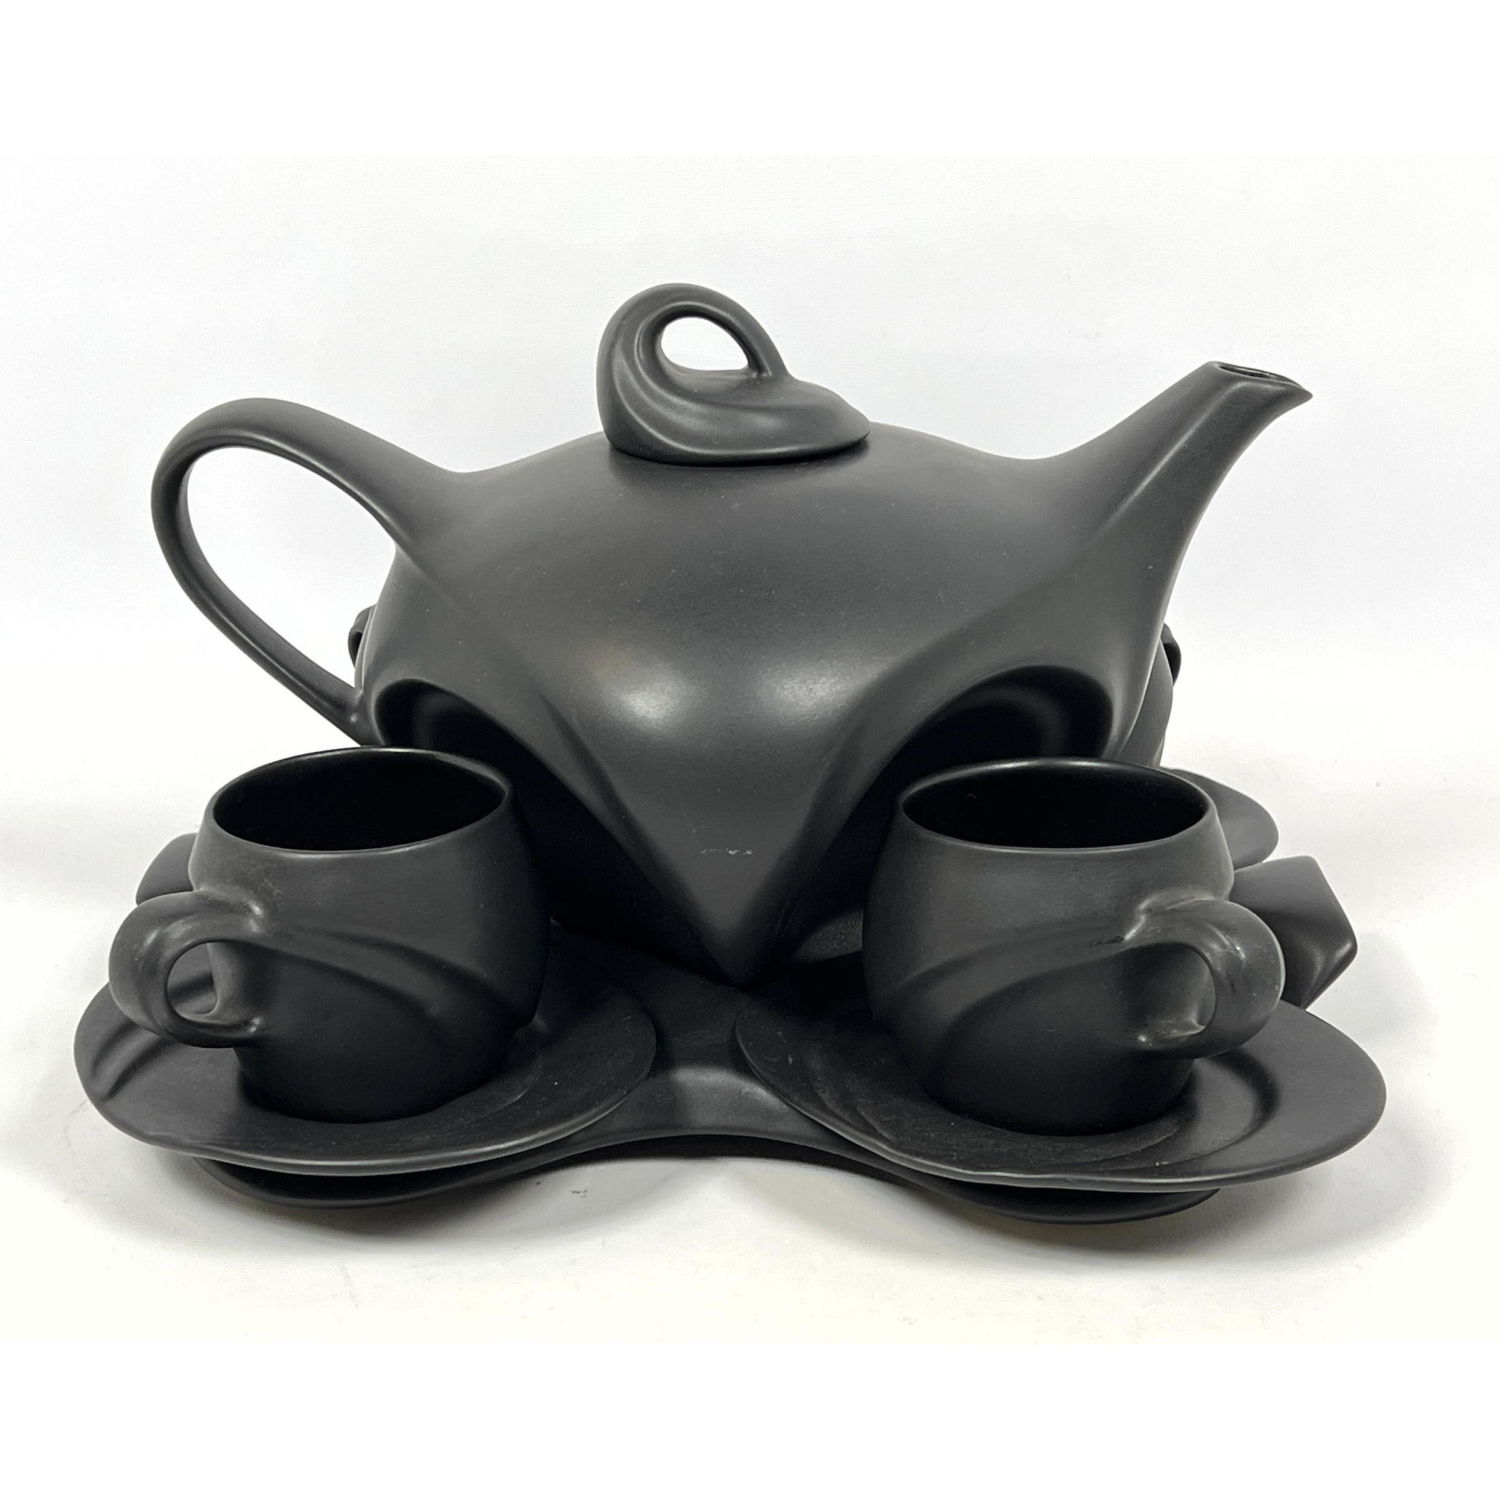 PETER SAENGER Teapot Set with HTF 2fef63